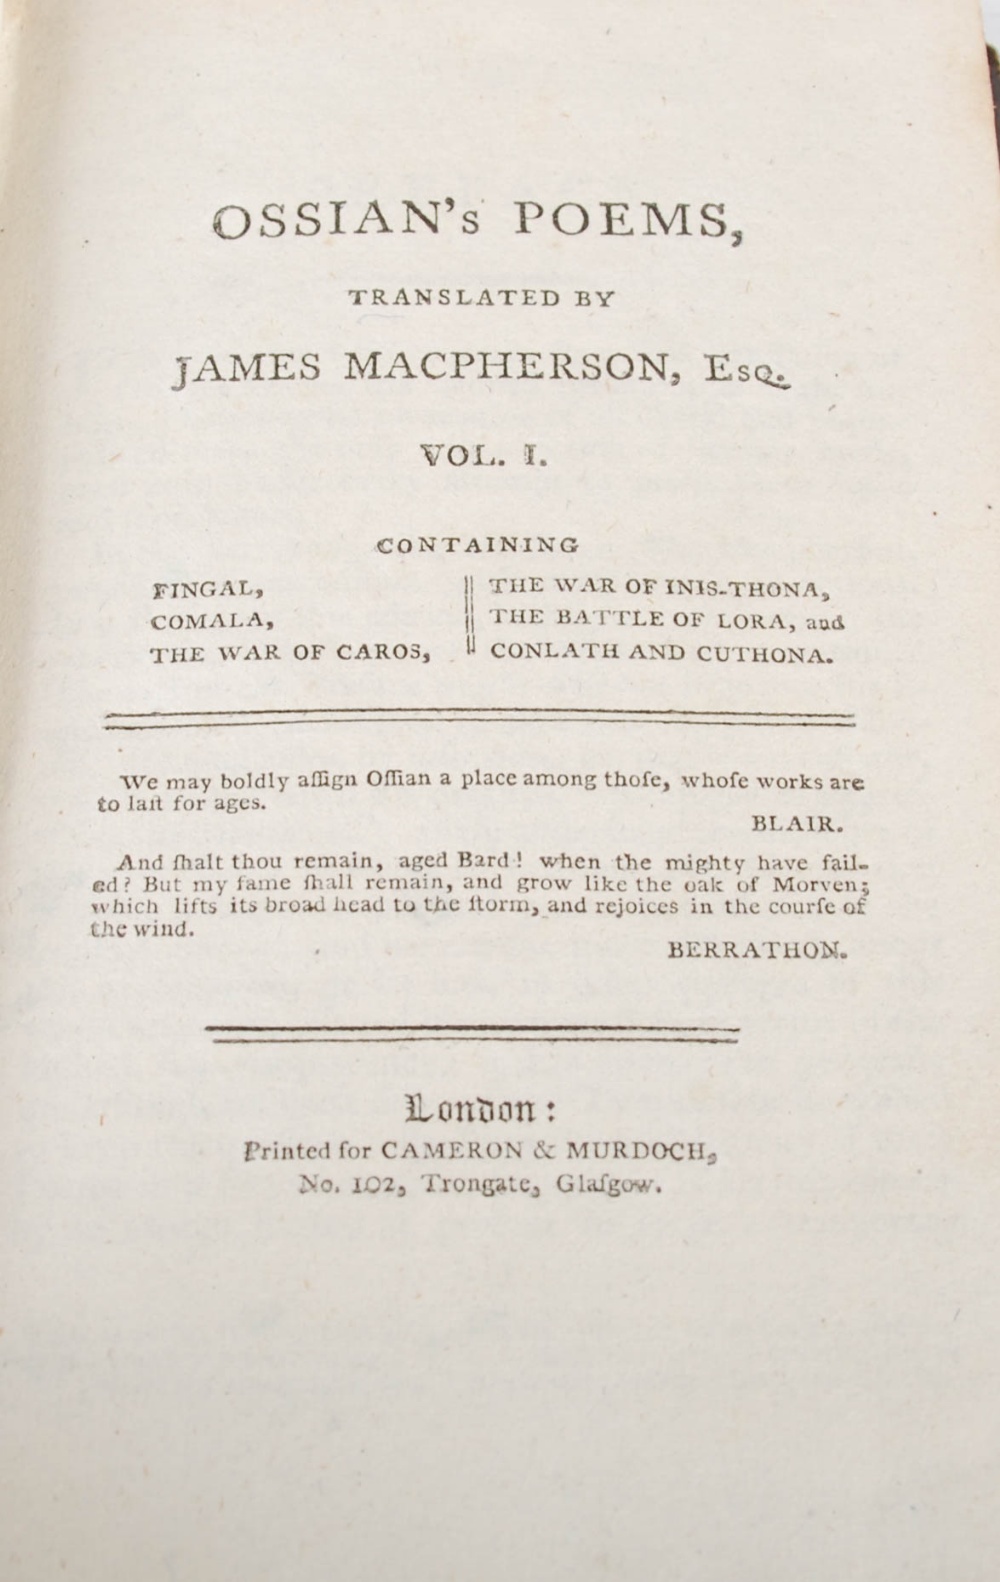 Ossian's Poems translated by James MacPherson, Esq., volume I & II